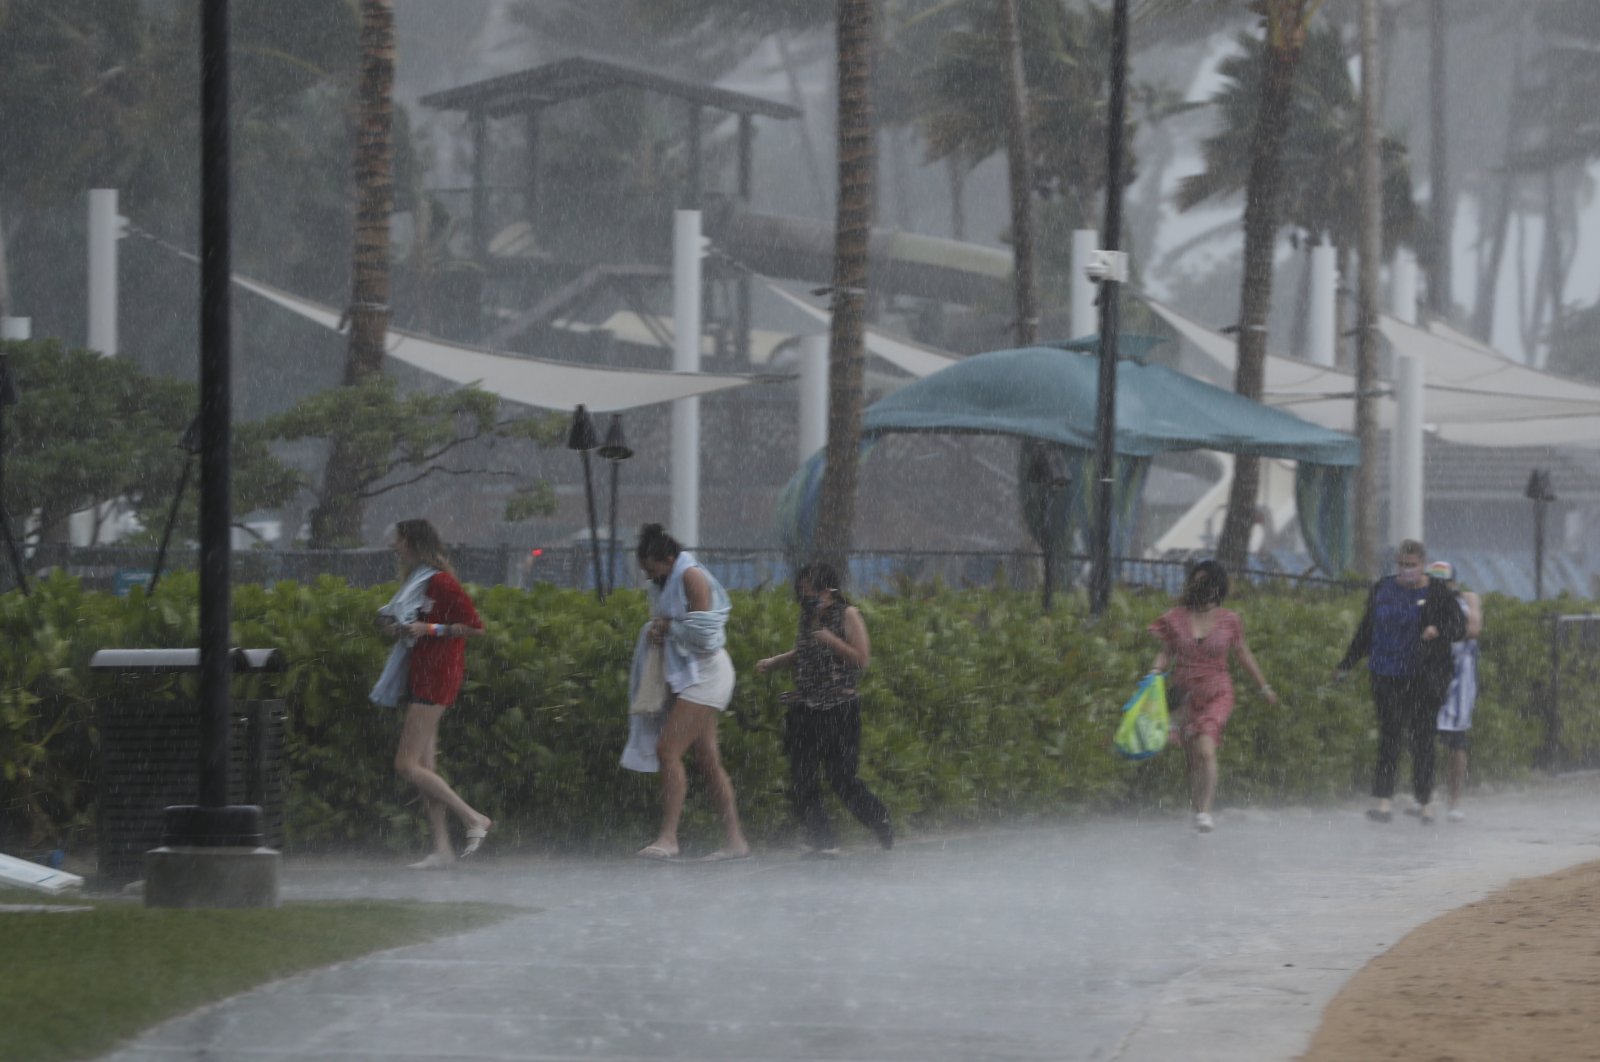 People scramble to get out of the heavy rain on Waikiki Beach, Honolulu, Hawaii, Dec. 6, 2021. (AP Photo)